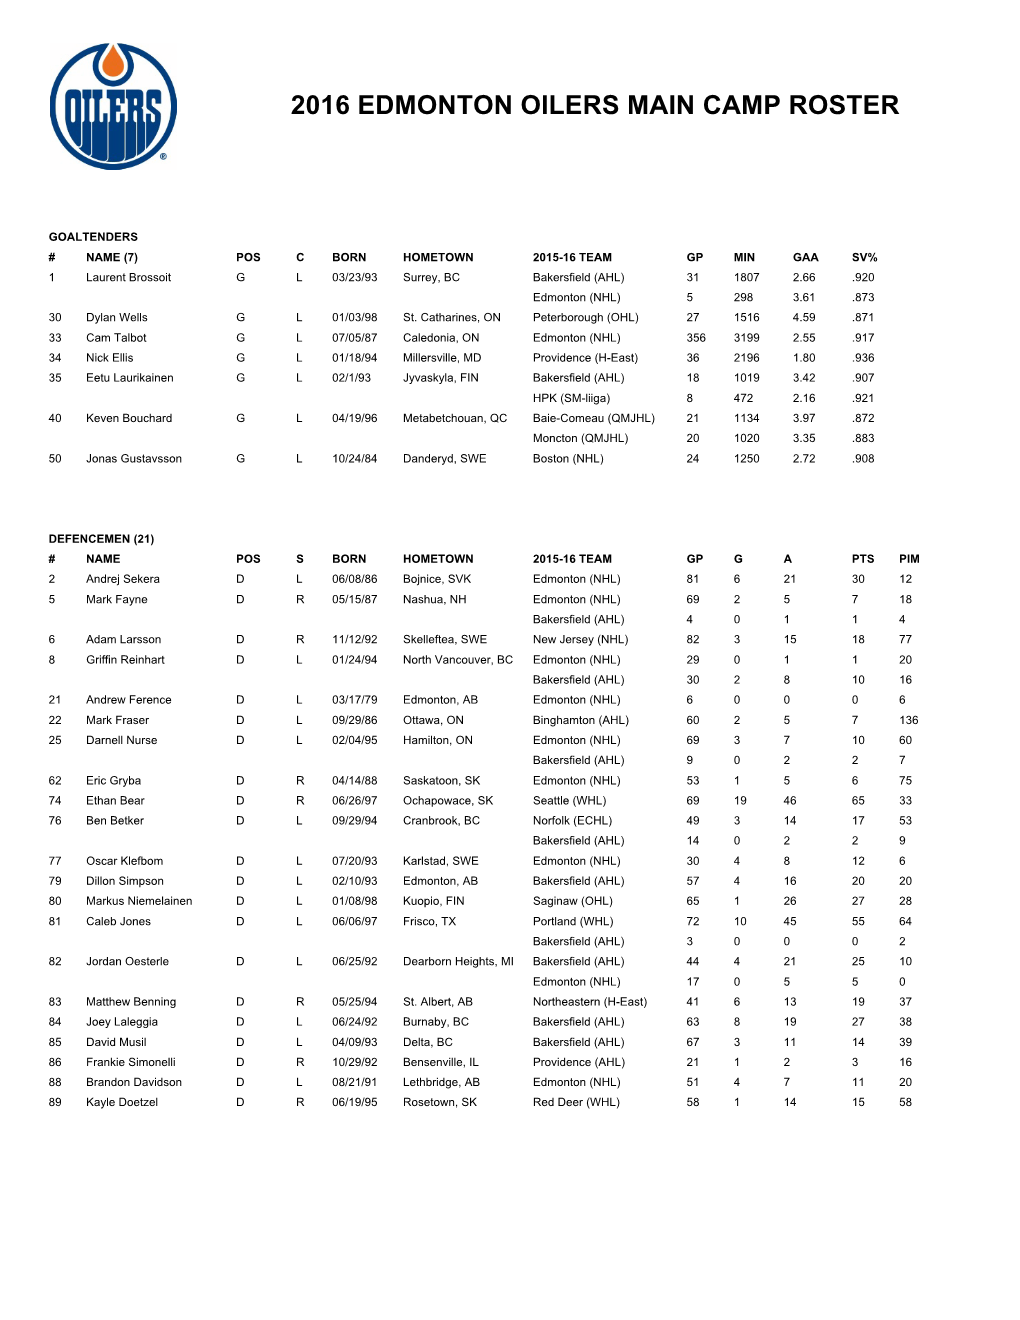 2016 Edmonton Oilers Main Camp Roster